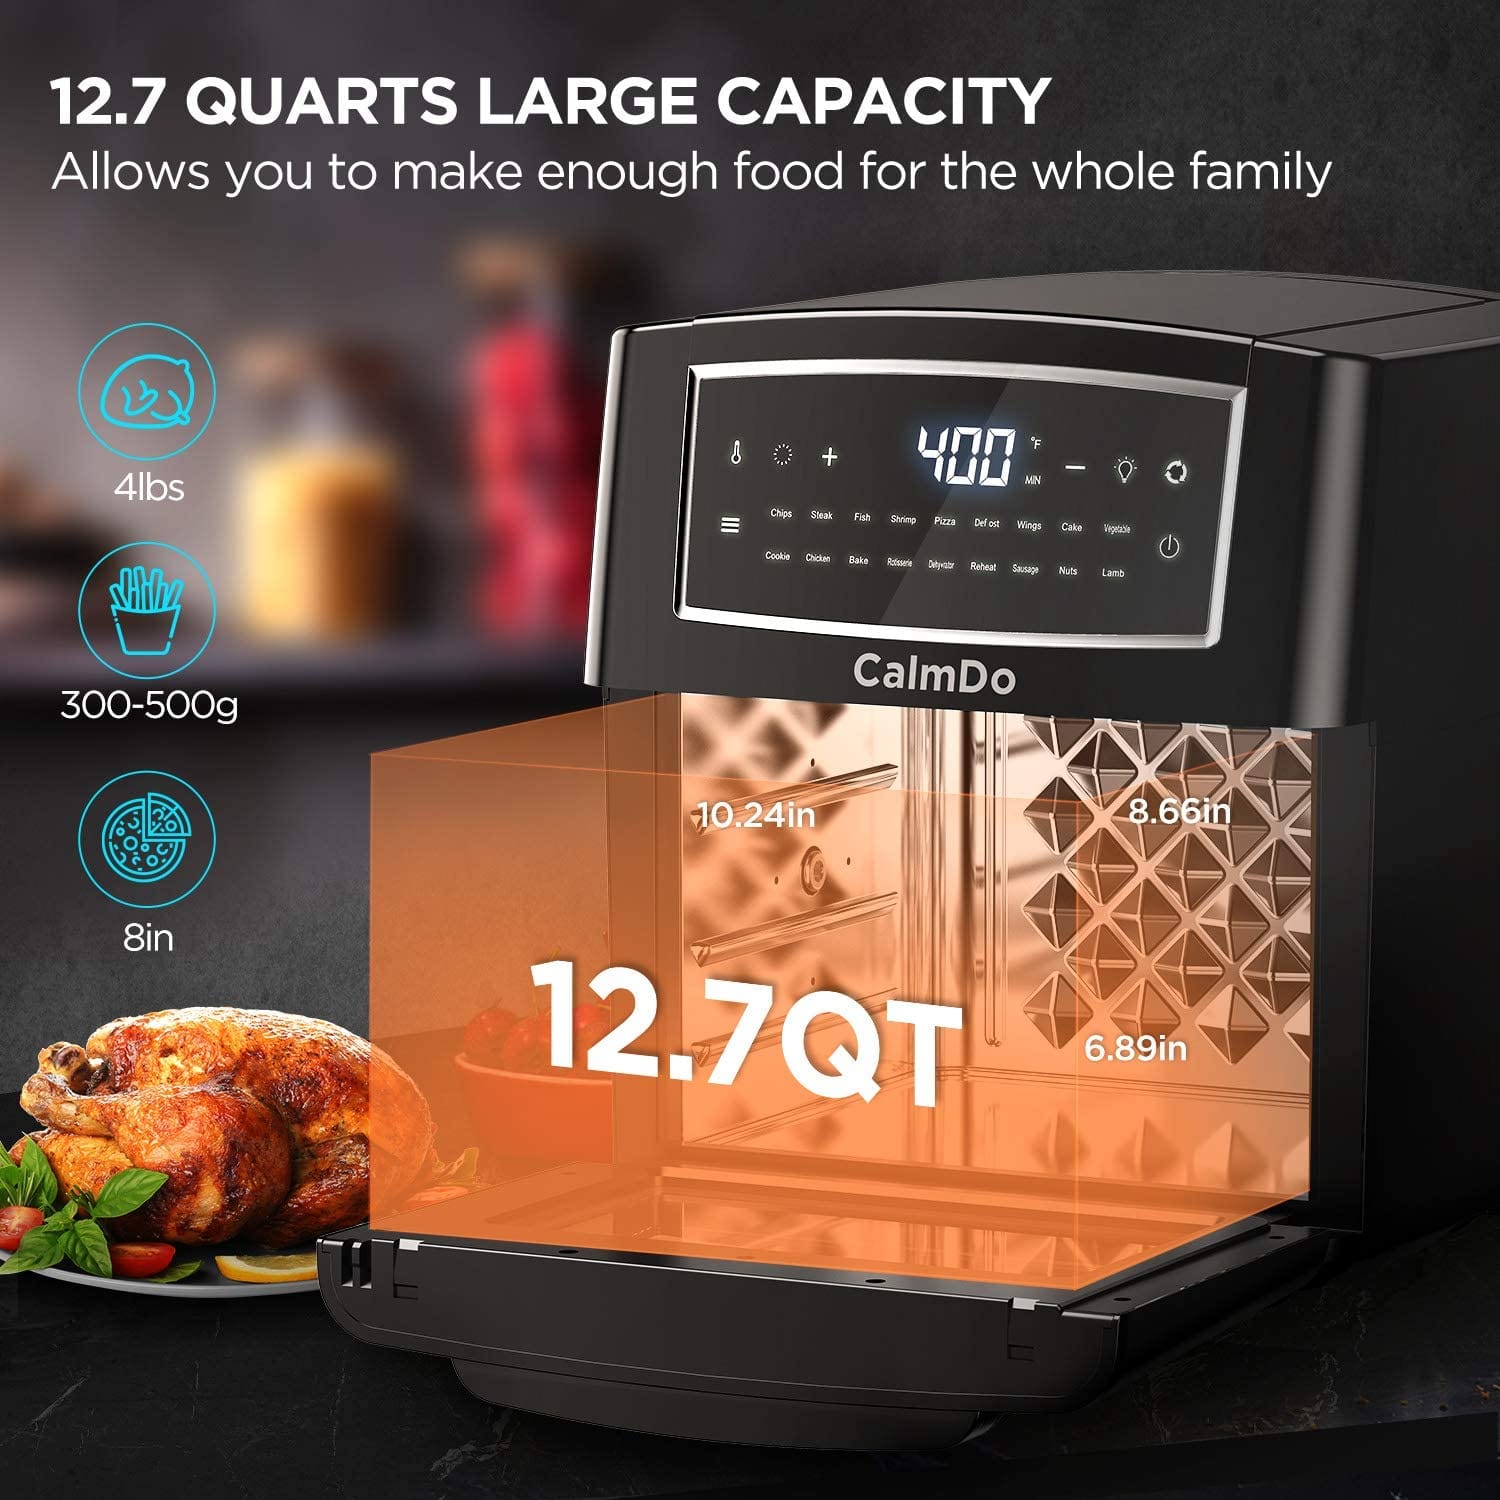 Calmdo 12.7 Quart Air Fryer Toaster Oven